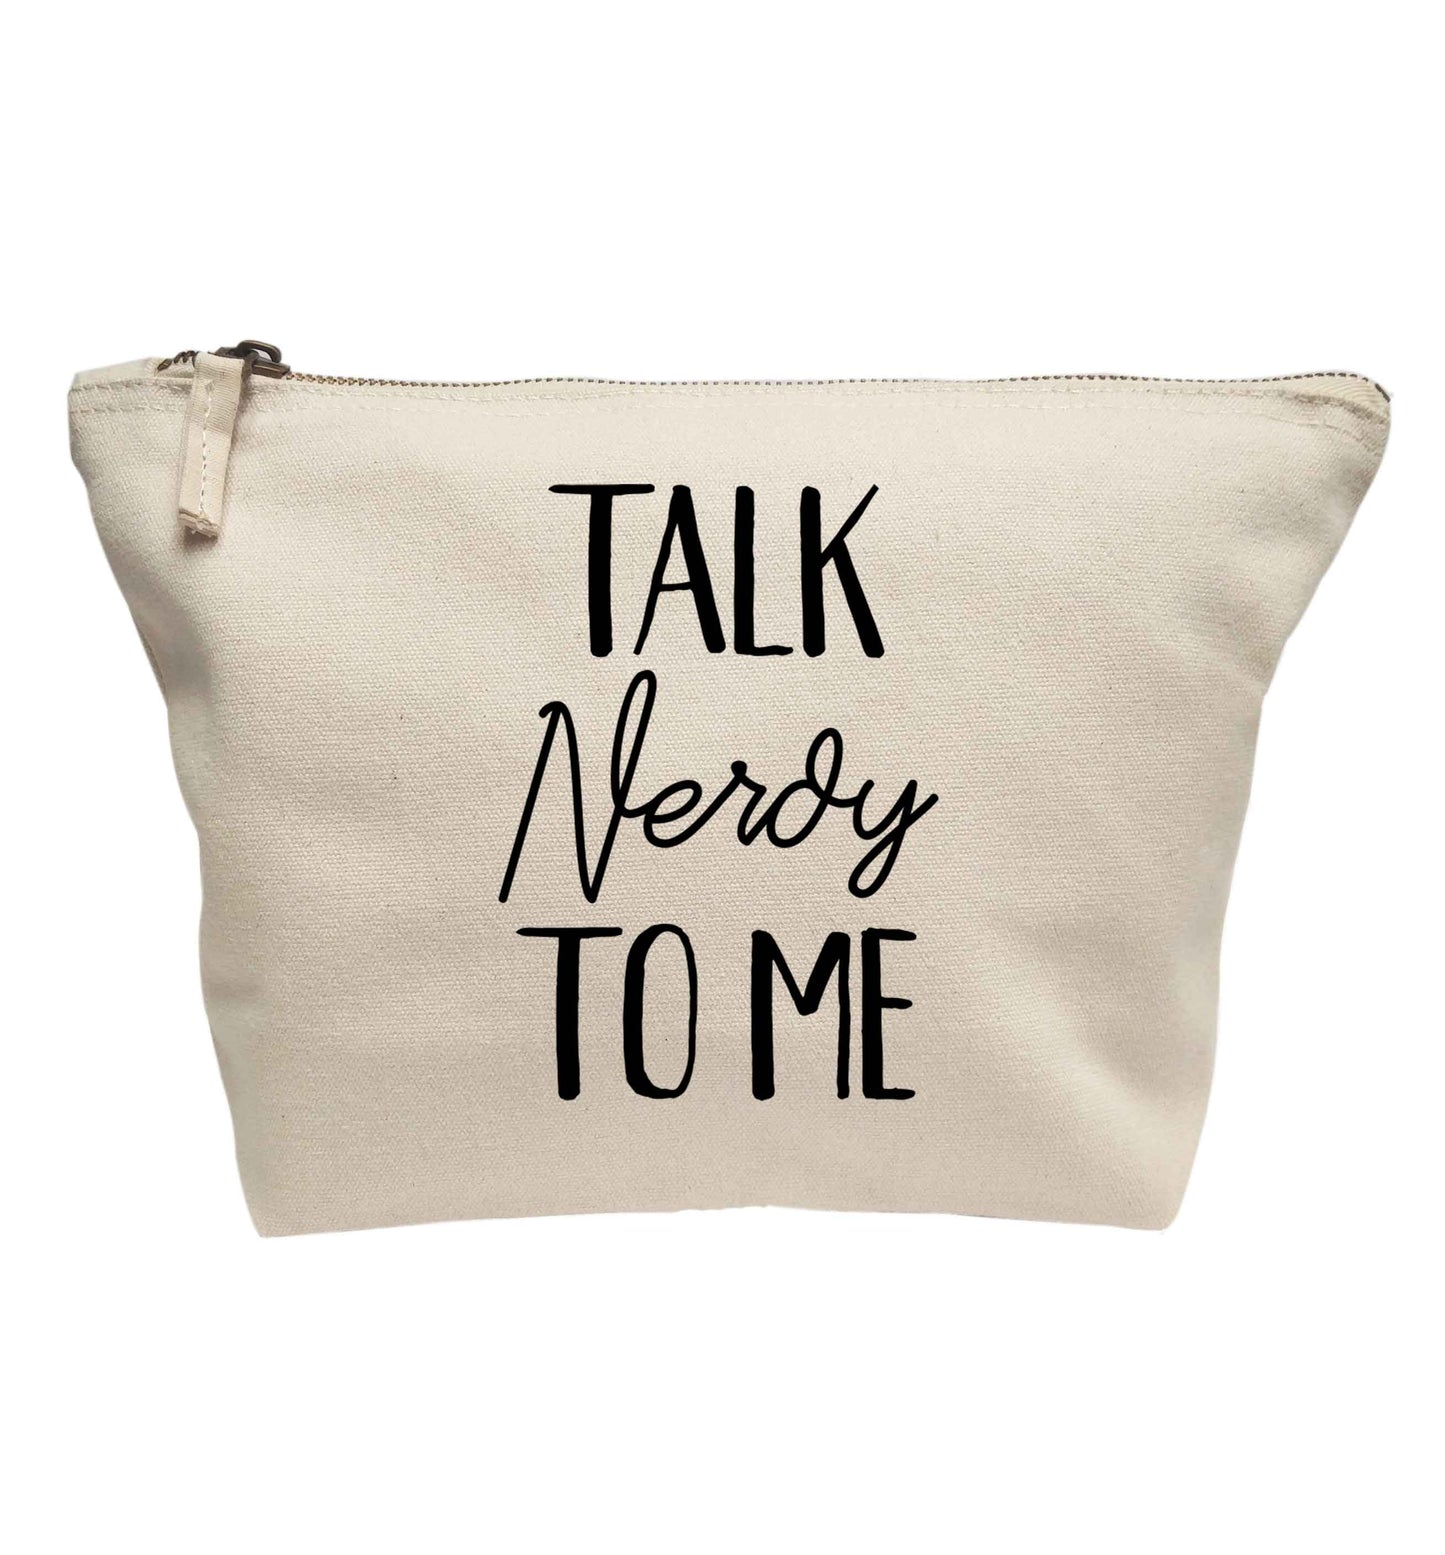 Talk nerdy to me | Makeup / wash bag